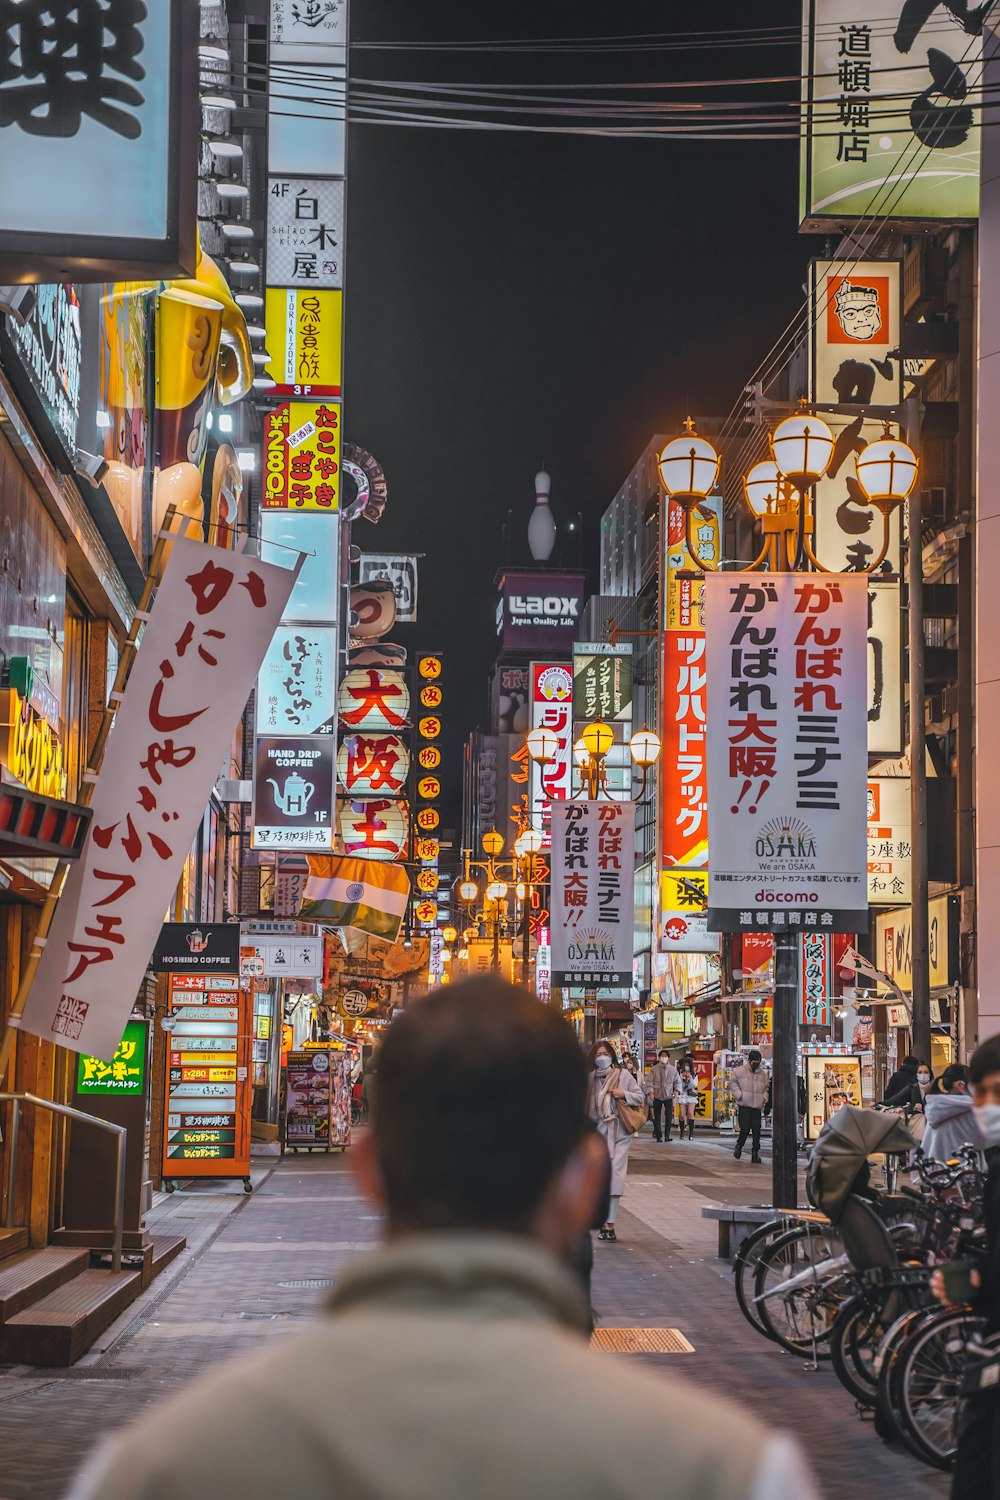 a man walking down a city street at night